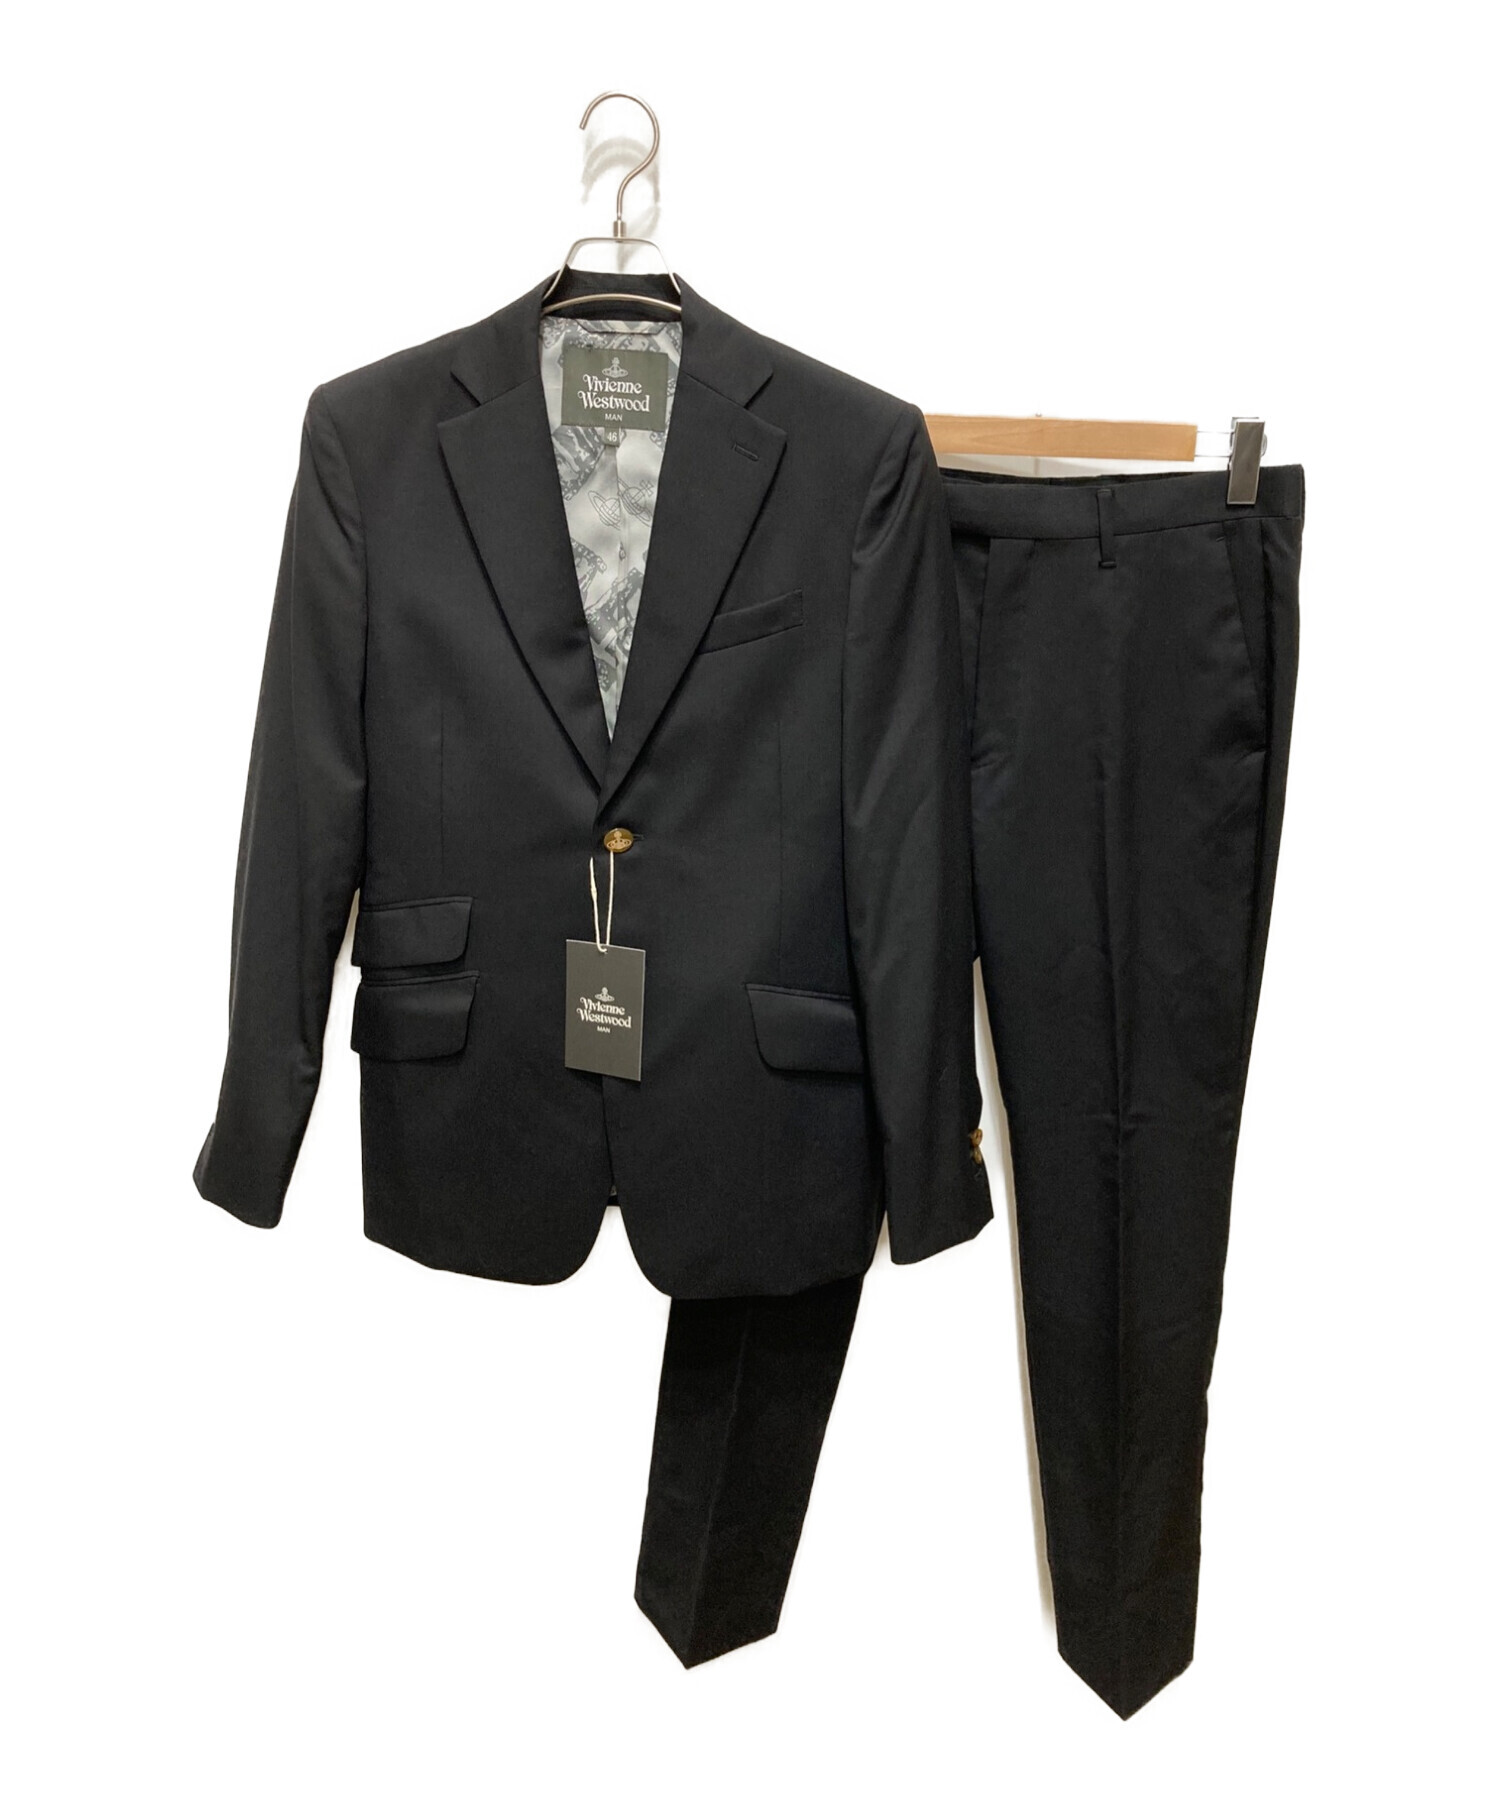 Vivienne Westwood MAN ジャケット スーツ用 46 - スーツジャケット